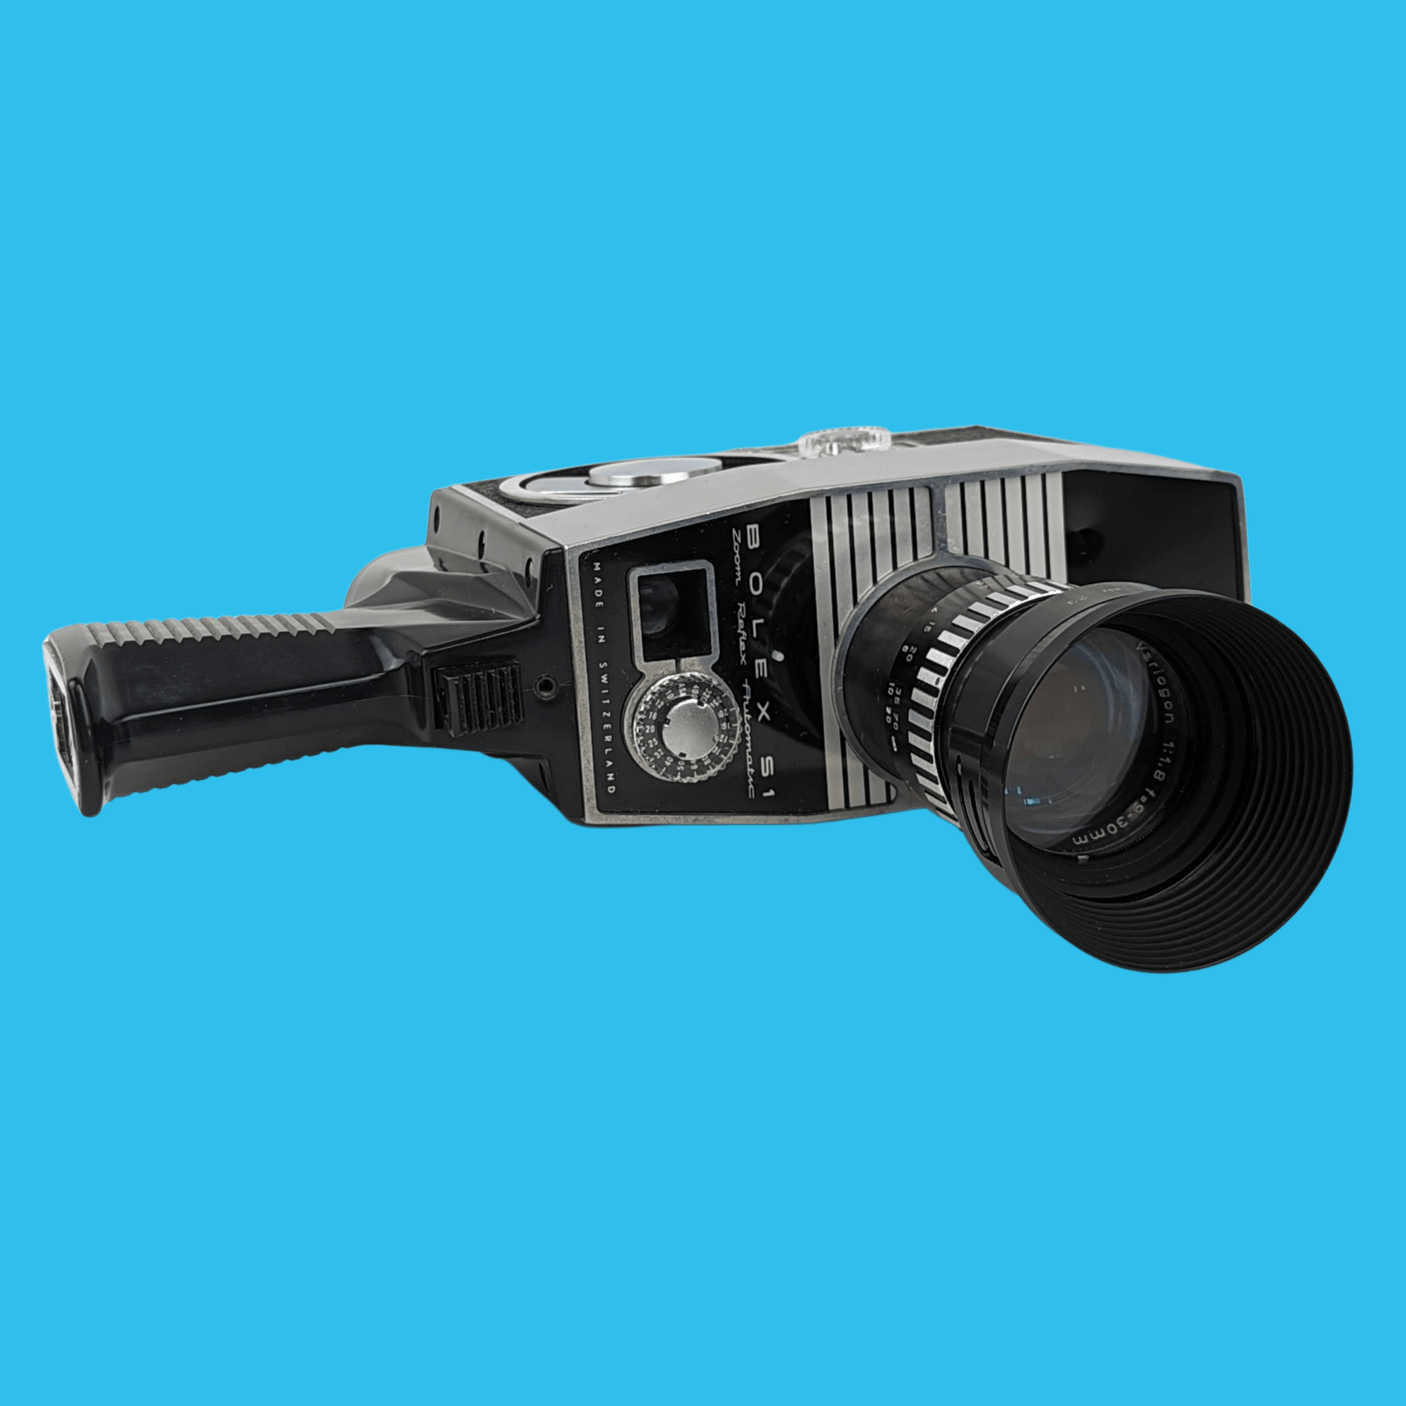 Bolex S1 Zoom Reflex Automatic 8mm Movie Cine Camera